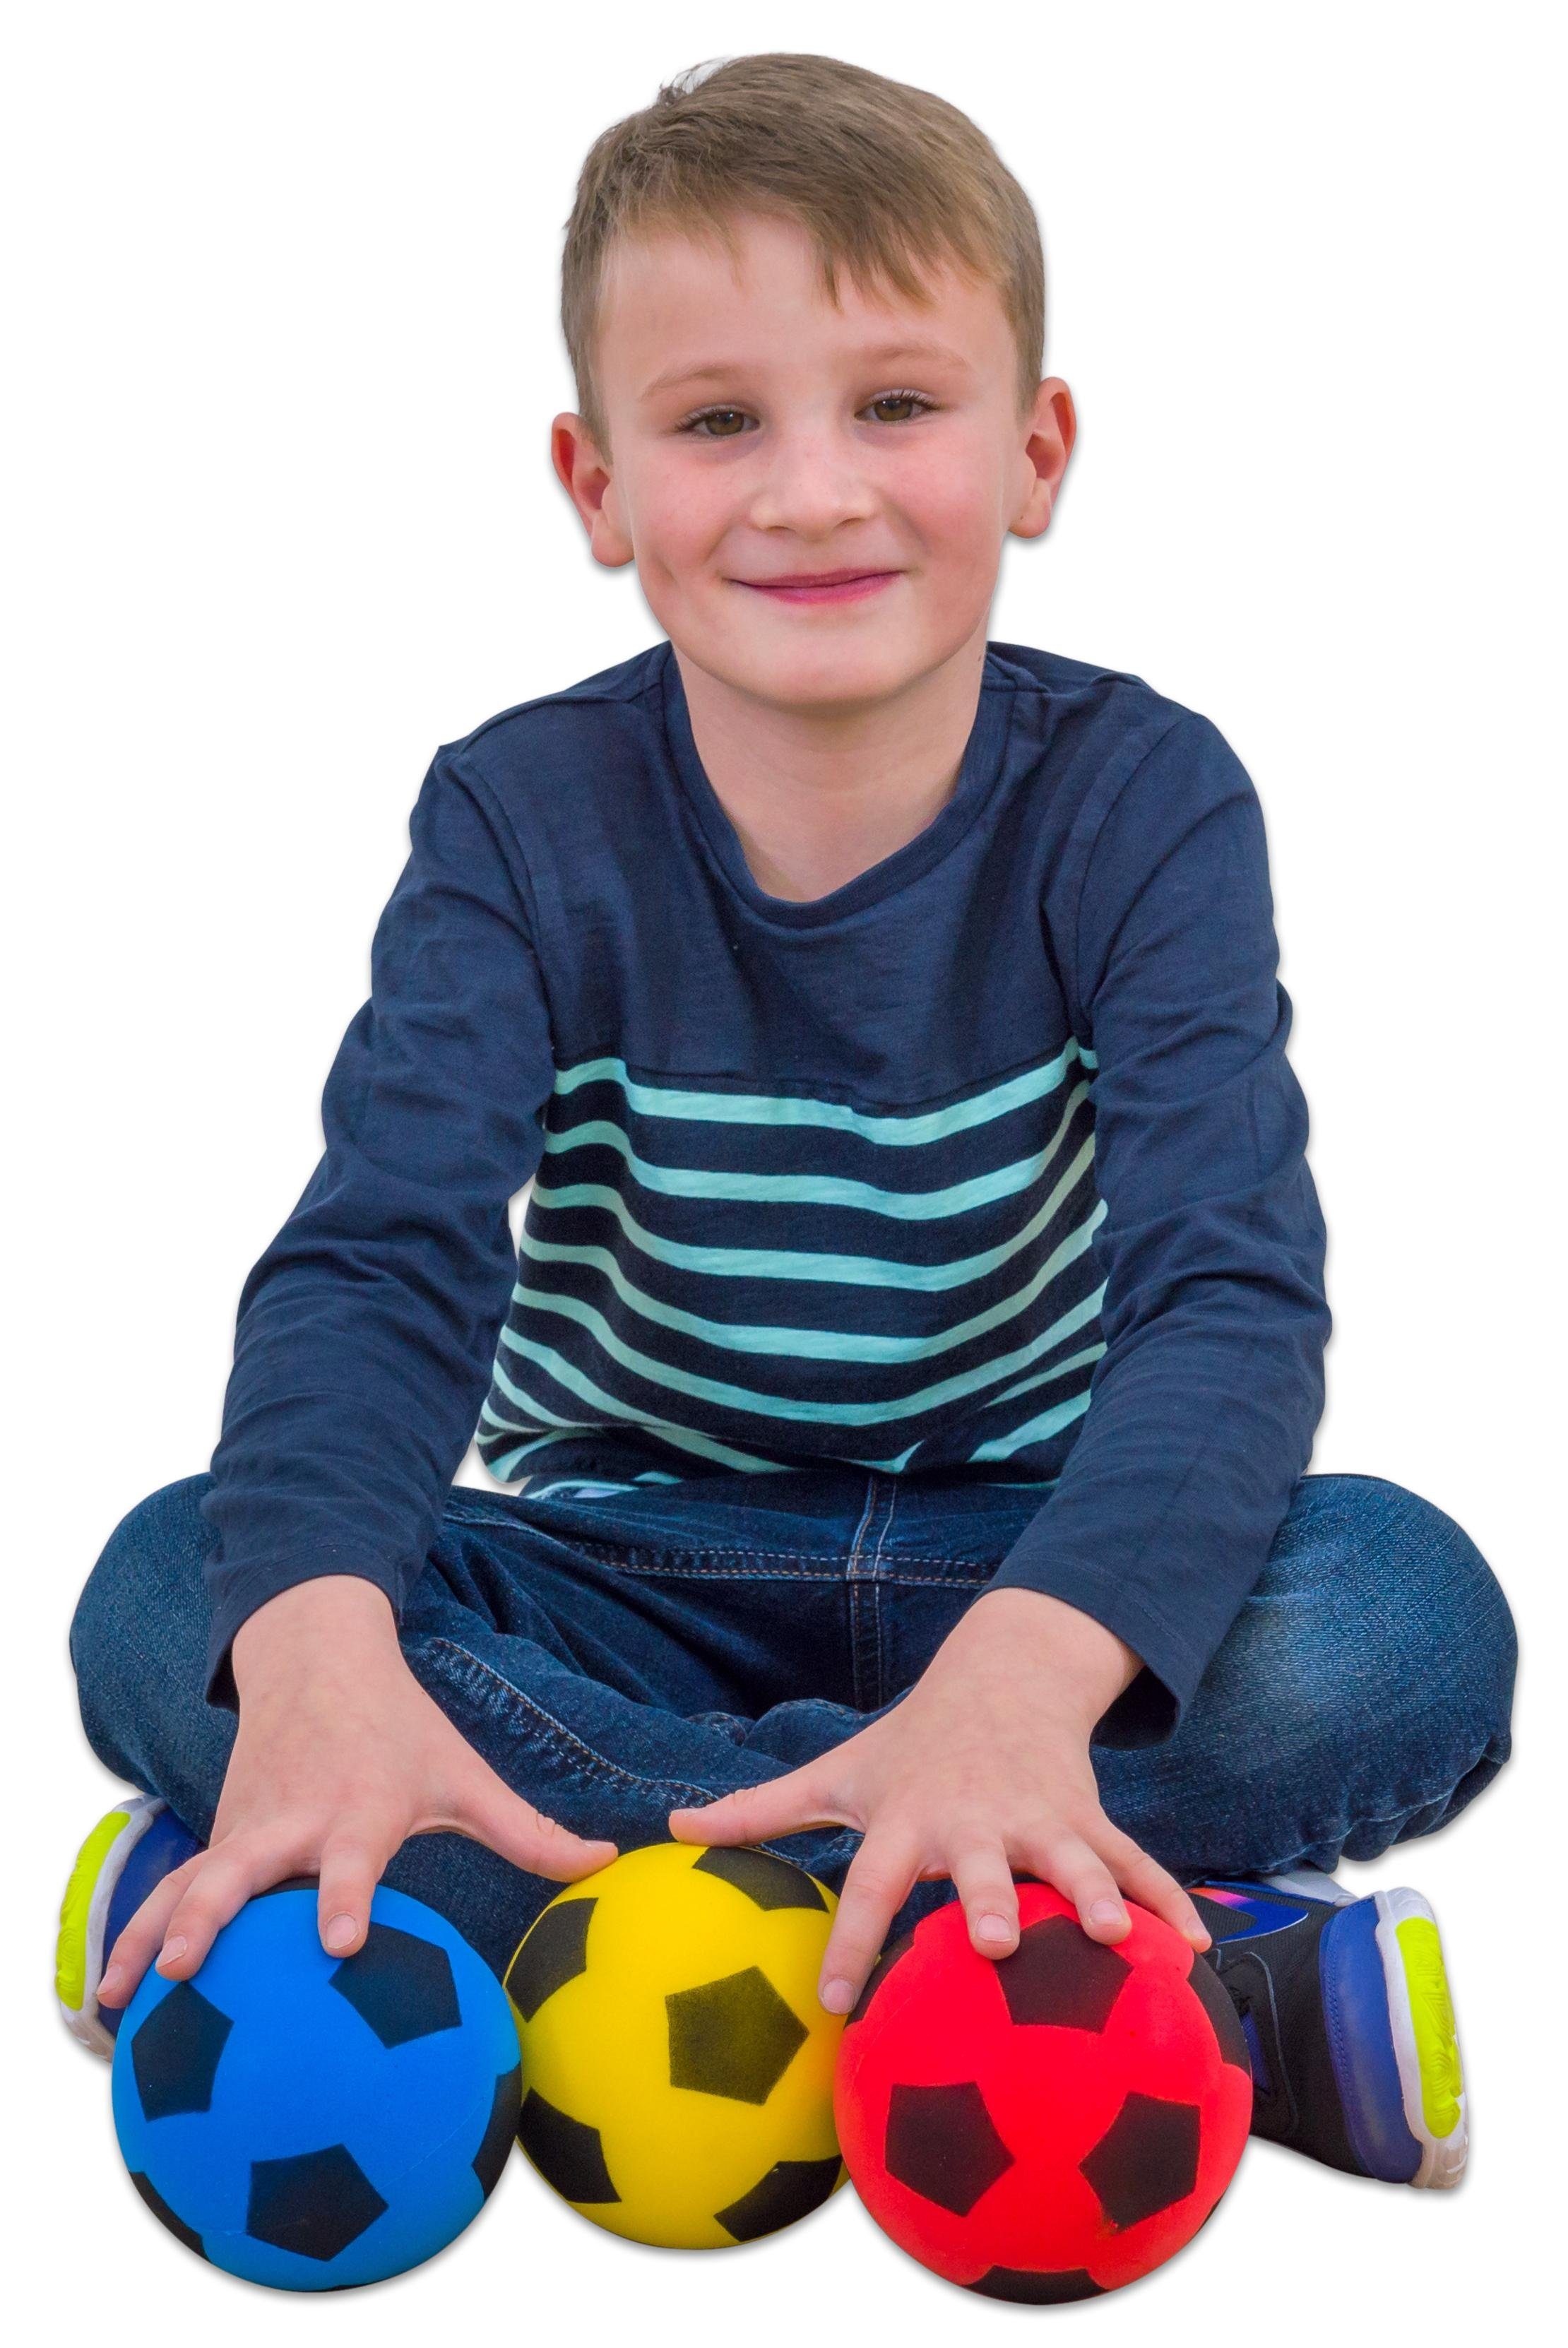 Kinder-Ball Betzold Ballsport Erfahrungen im für erste Softbälle-Set Softball geeignet Stück Optimal 3 Sport Kinder-Schaumstoffball Spielbälle, -